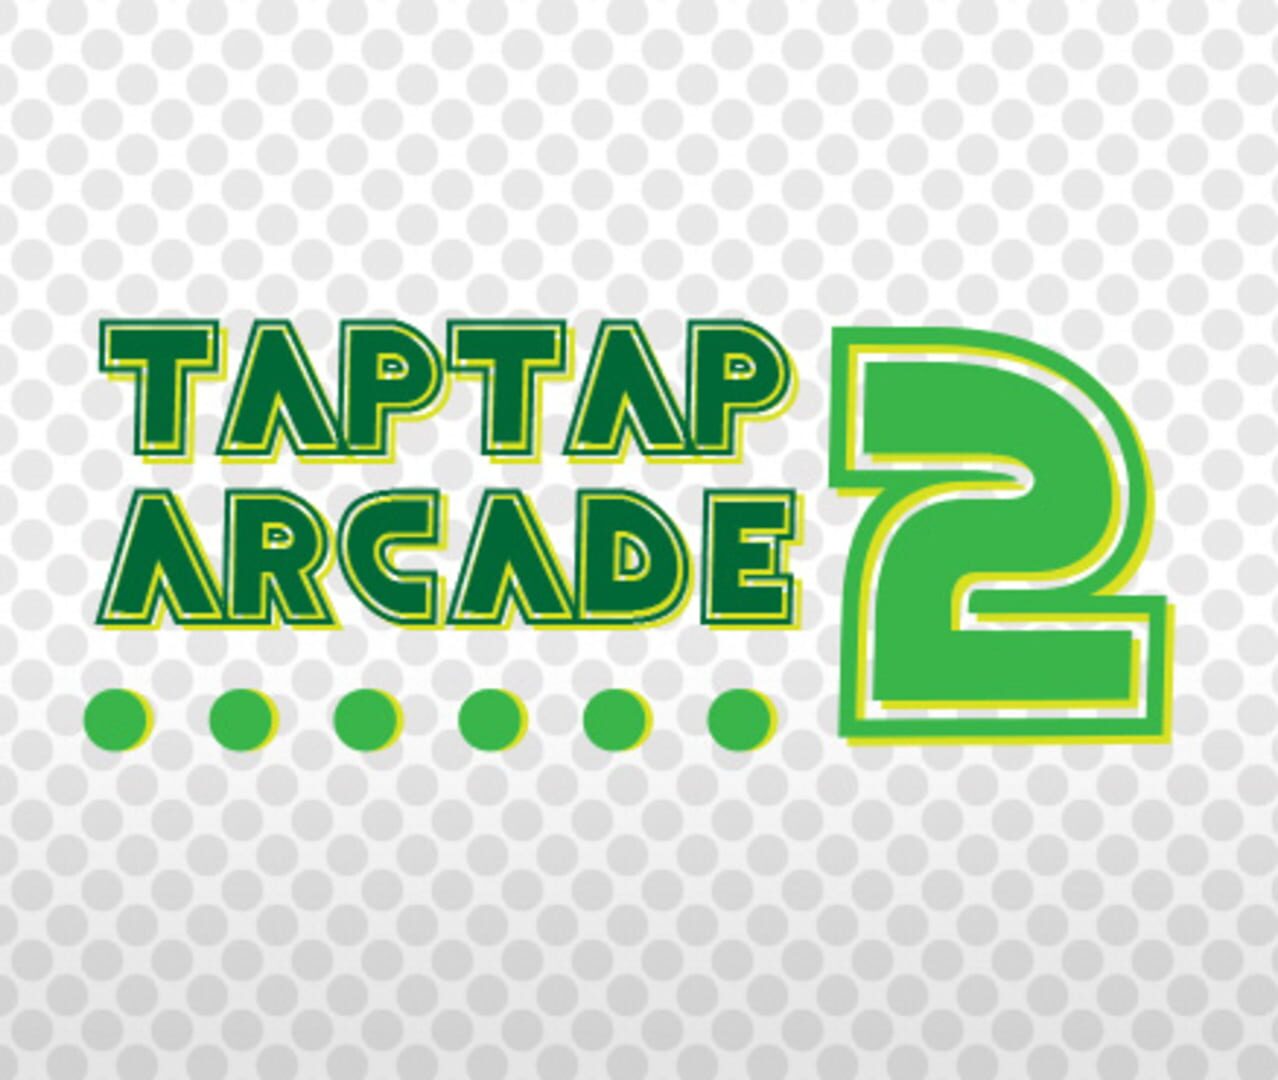 Tap Tap Arcade 2